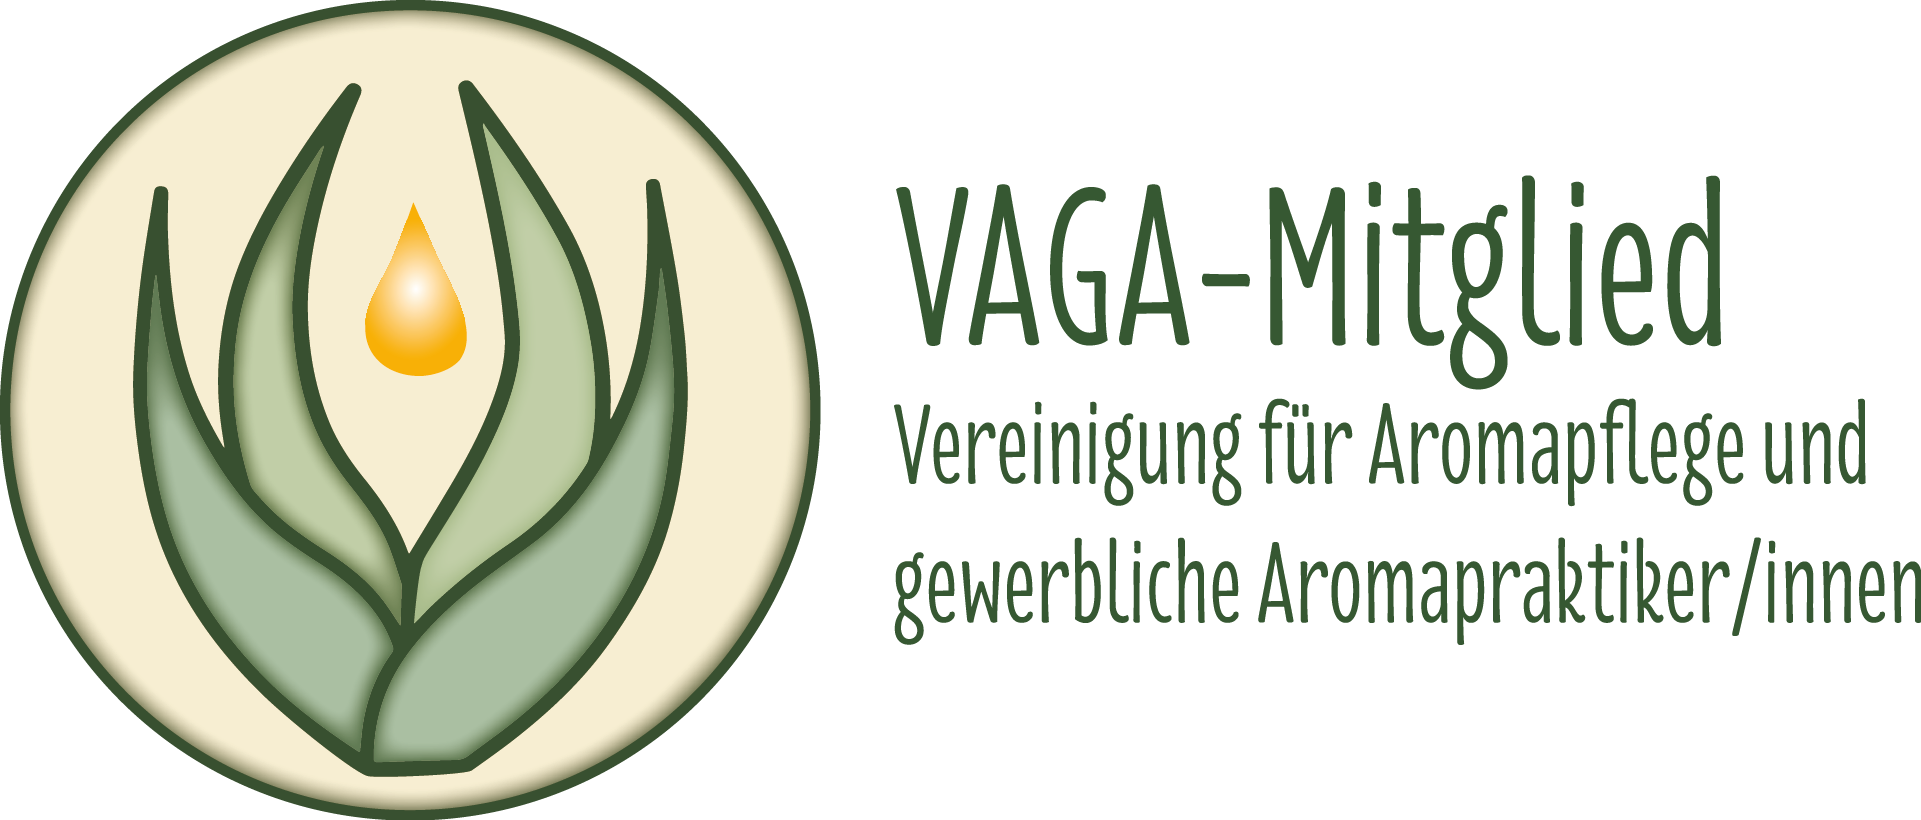 VAGA-Mitglied